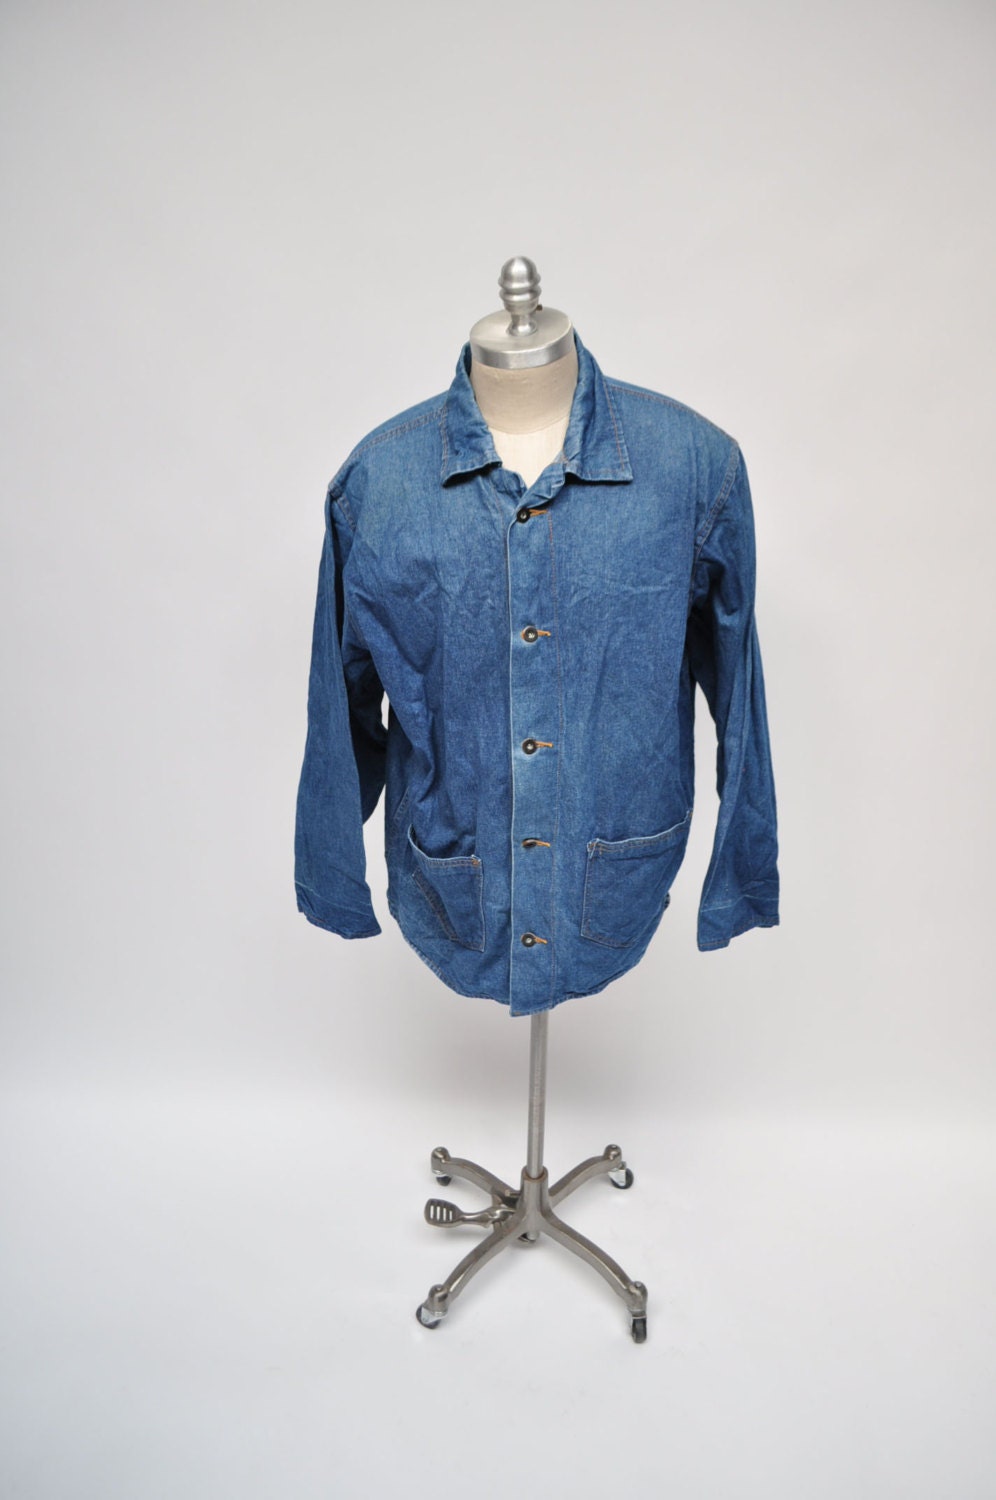 vintage denim jacket PRISON pelican bay work wear size 44